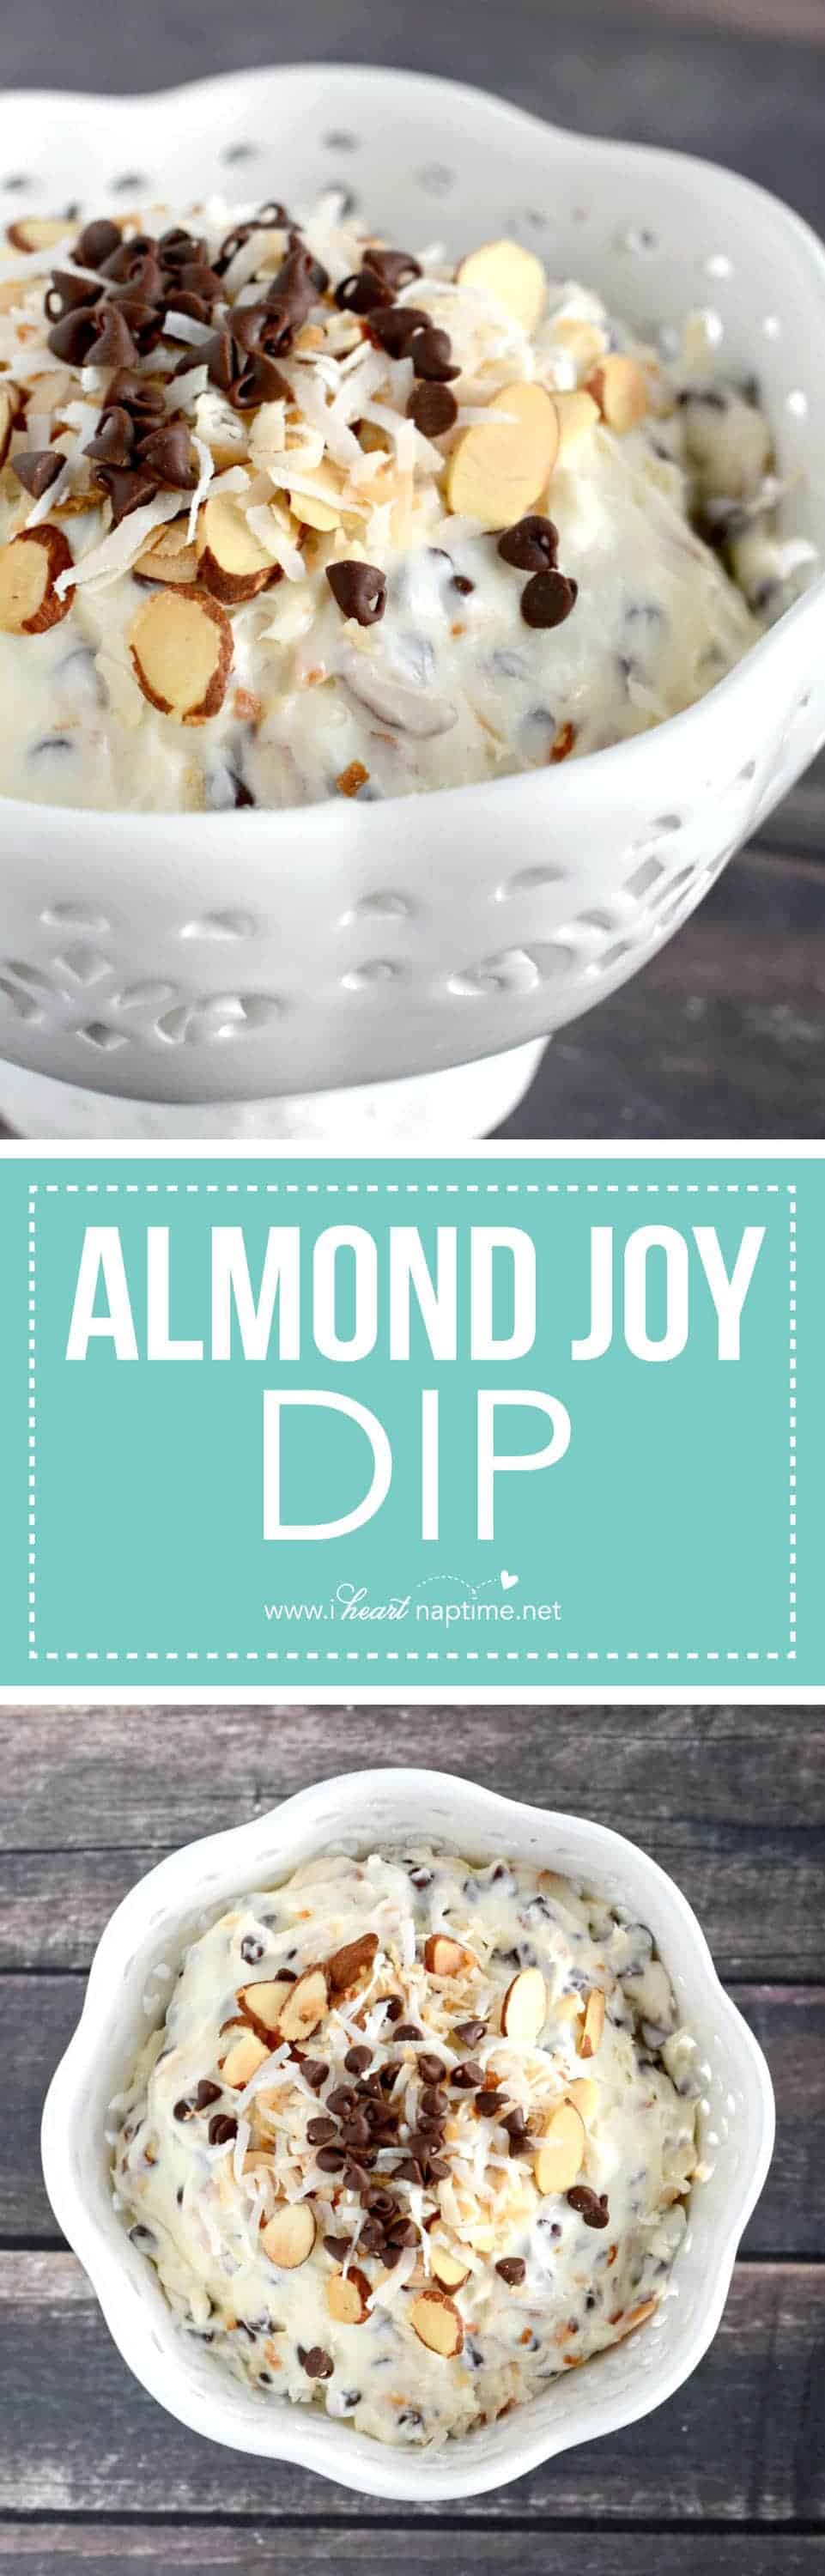 almond joy dip collage